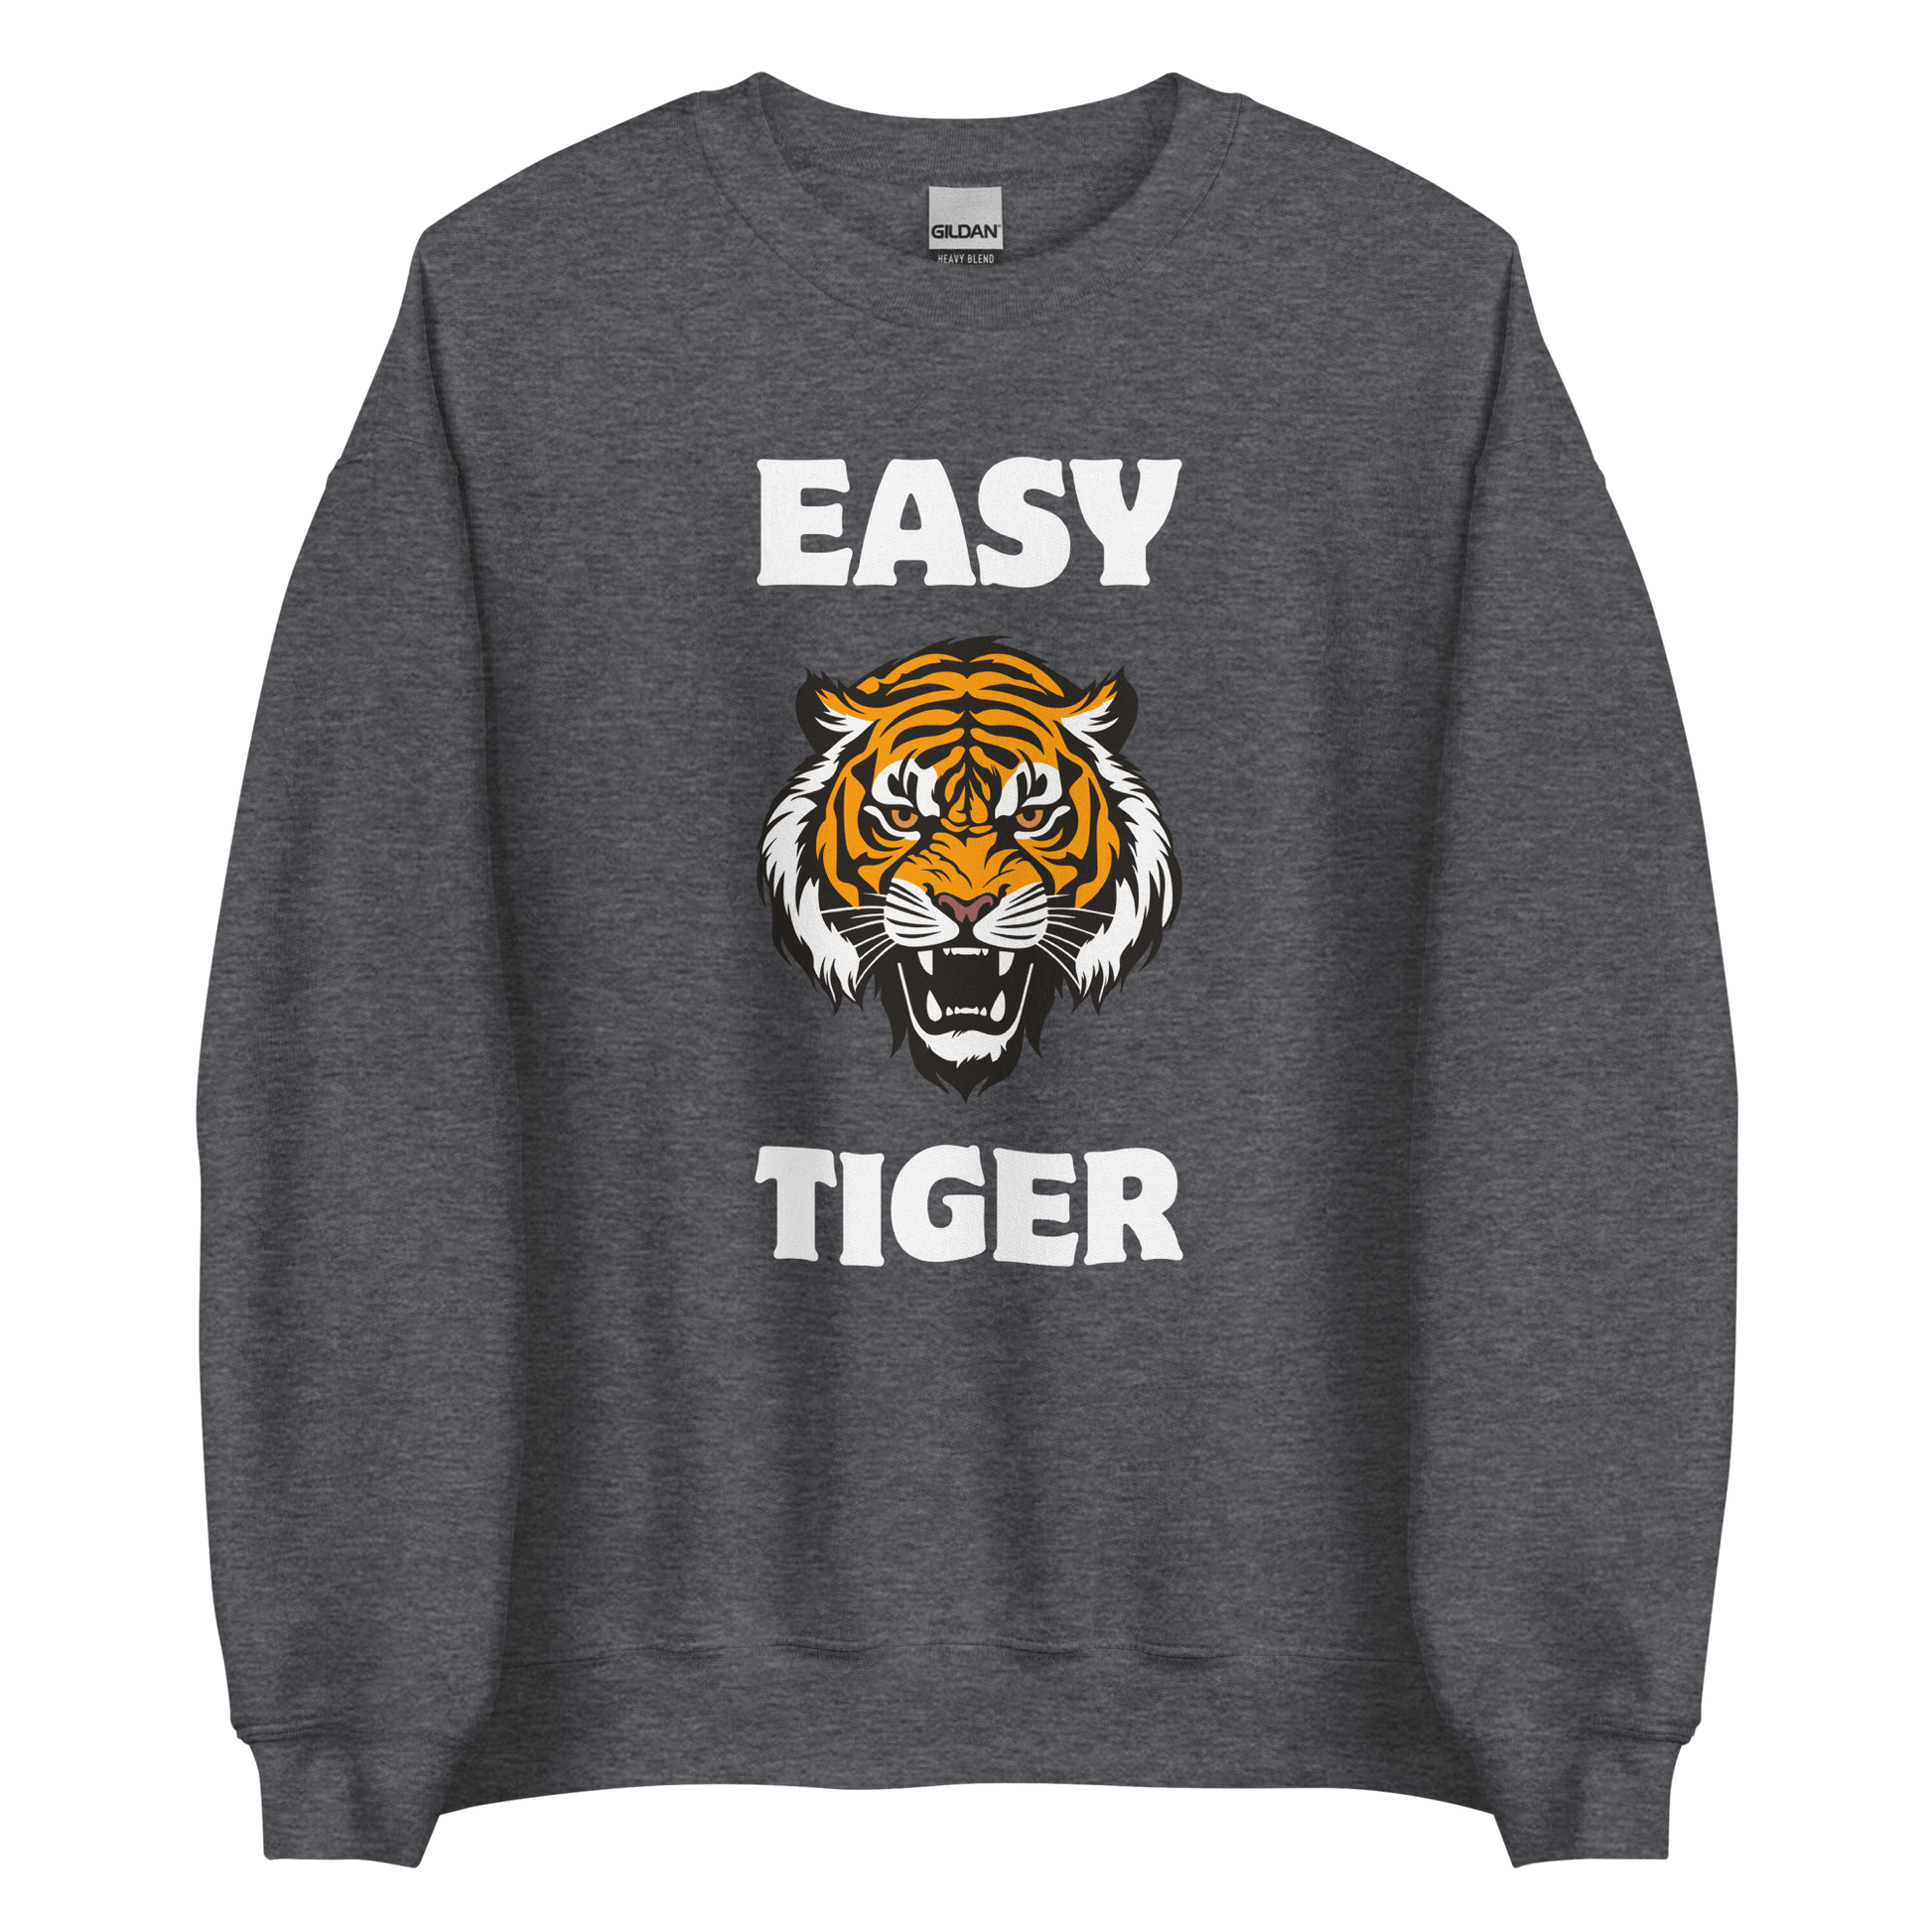 Dark Heather Tiger Sweatshirt featuring a Easy Tiger graphic on the chest - Funny Graphic Tiger Sweatshirts - Boozy Fox